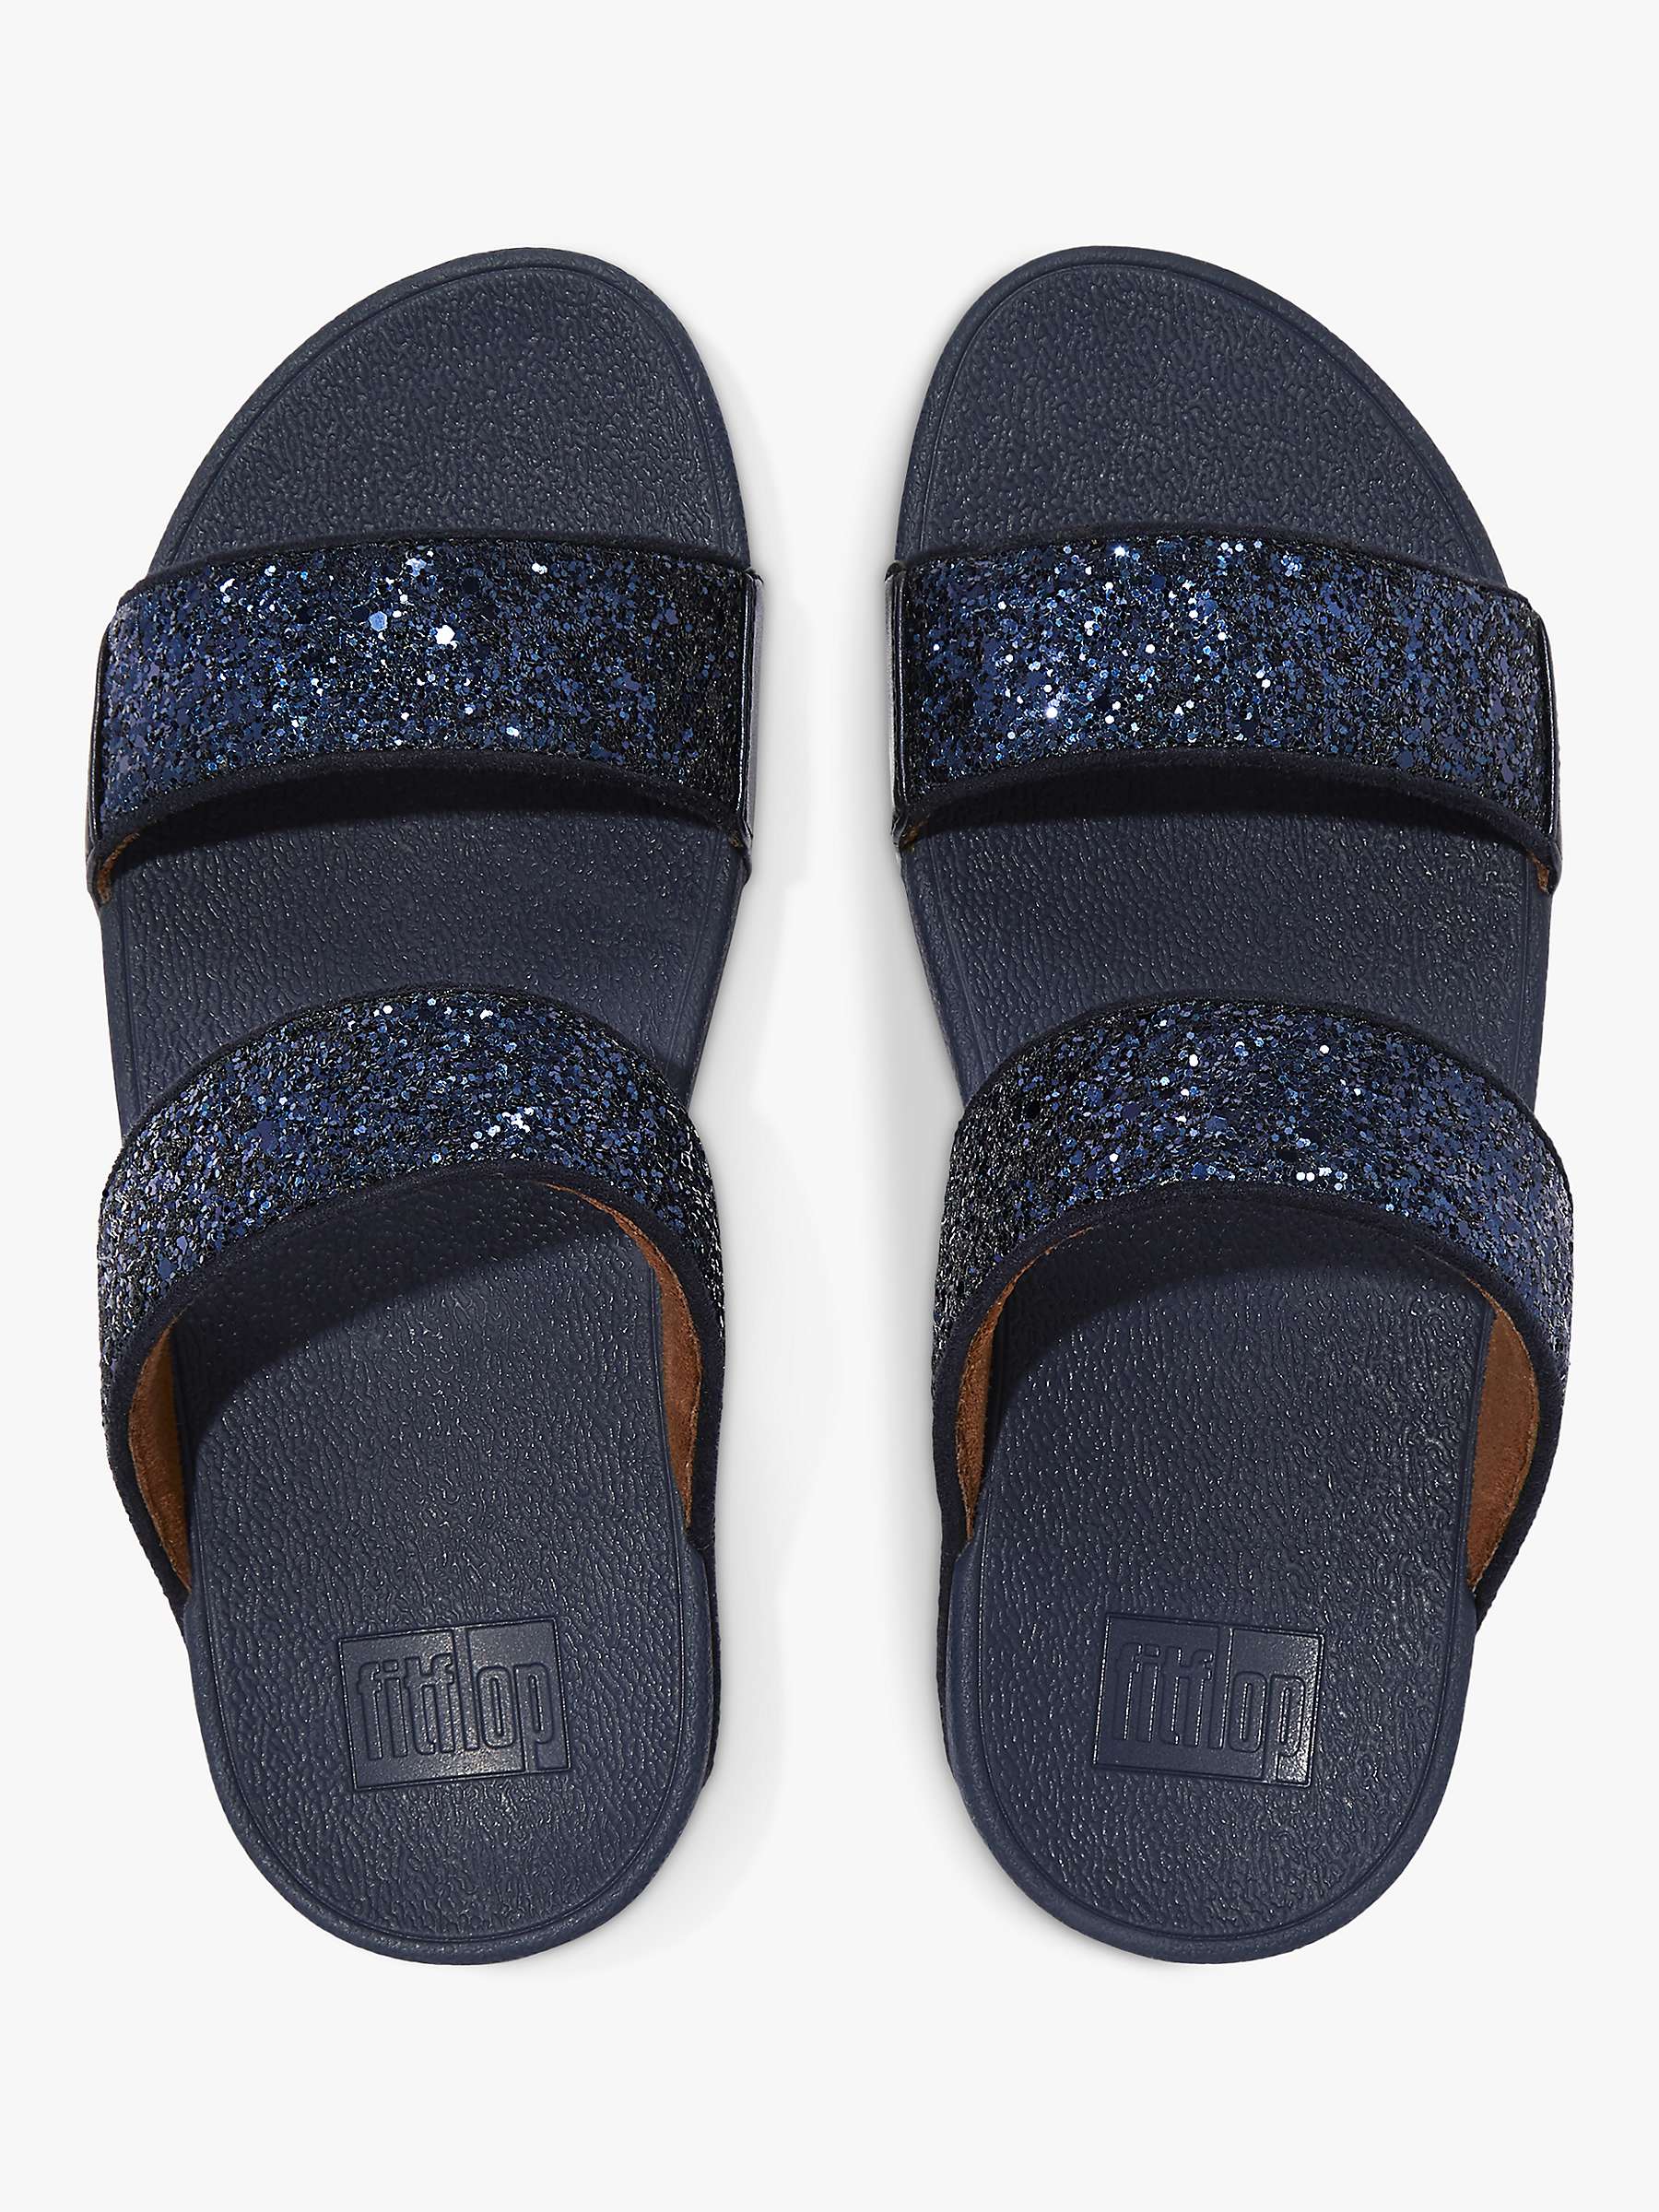 Buy FitFlop Lulu Glitter Slider Sandals, Navy Online at johnlewis.com